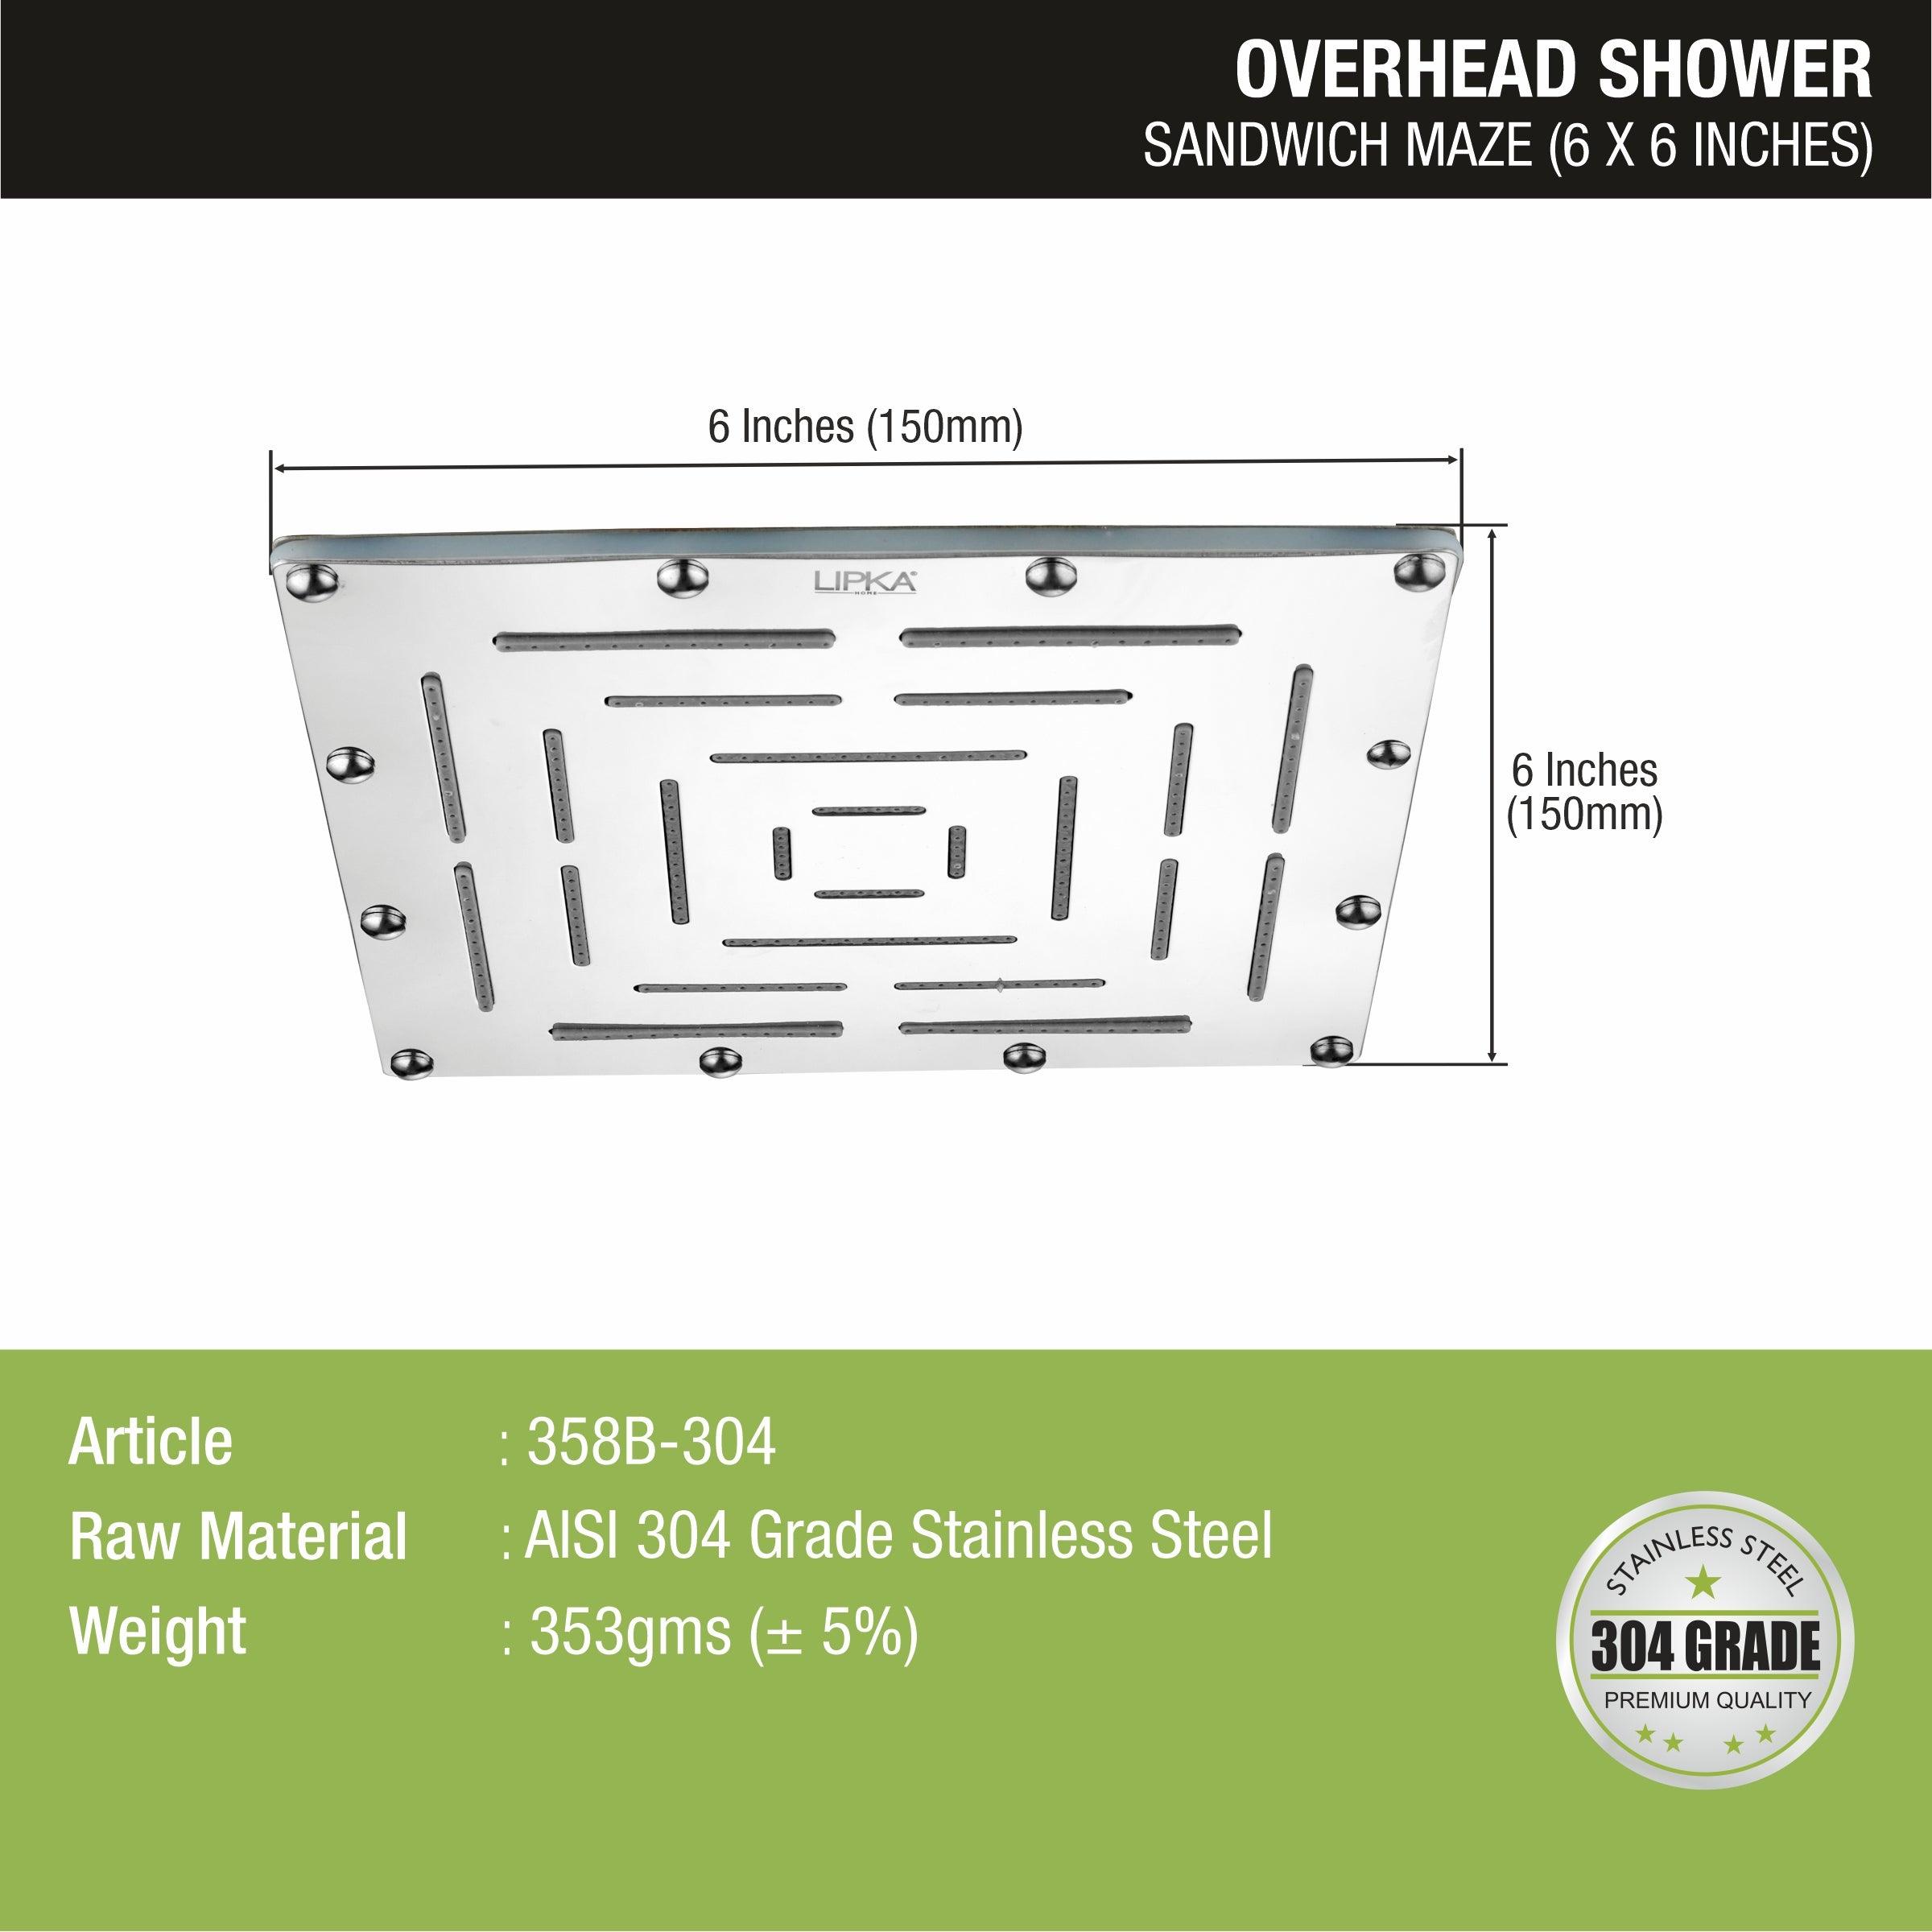 Sandwich Maze 304-Grade Overhead Rain Shower (6 x 6 Inches) sizes and dimensions